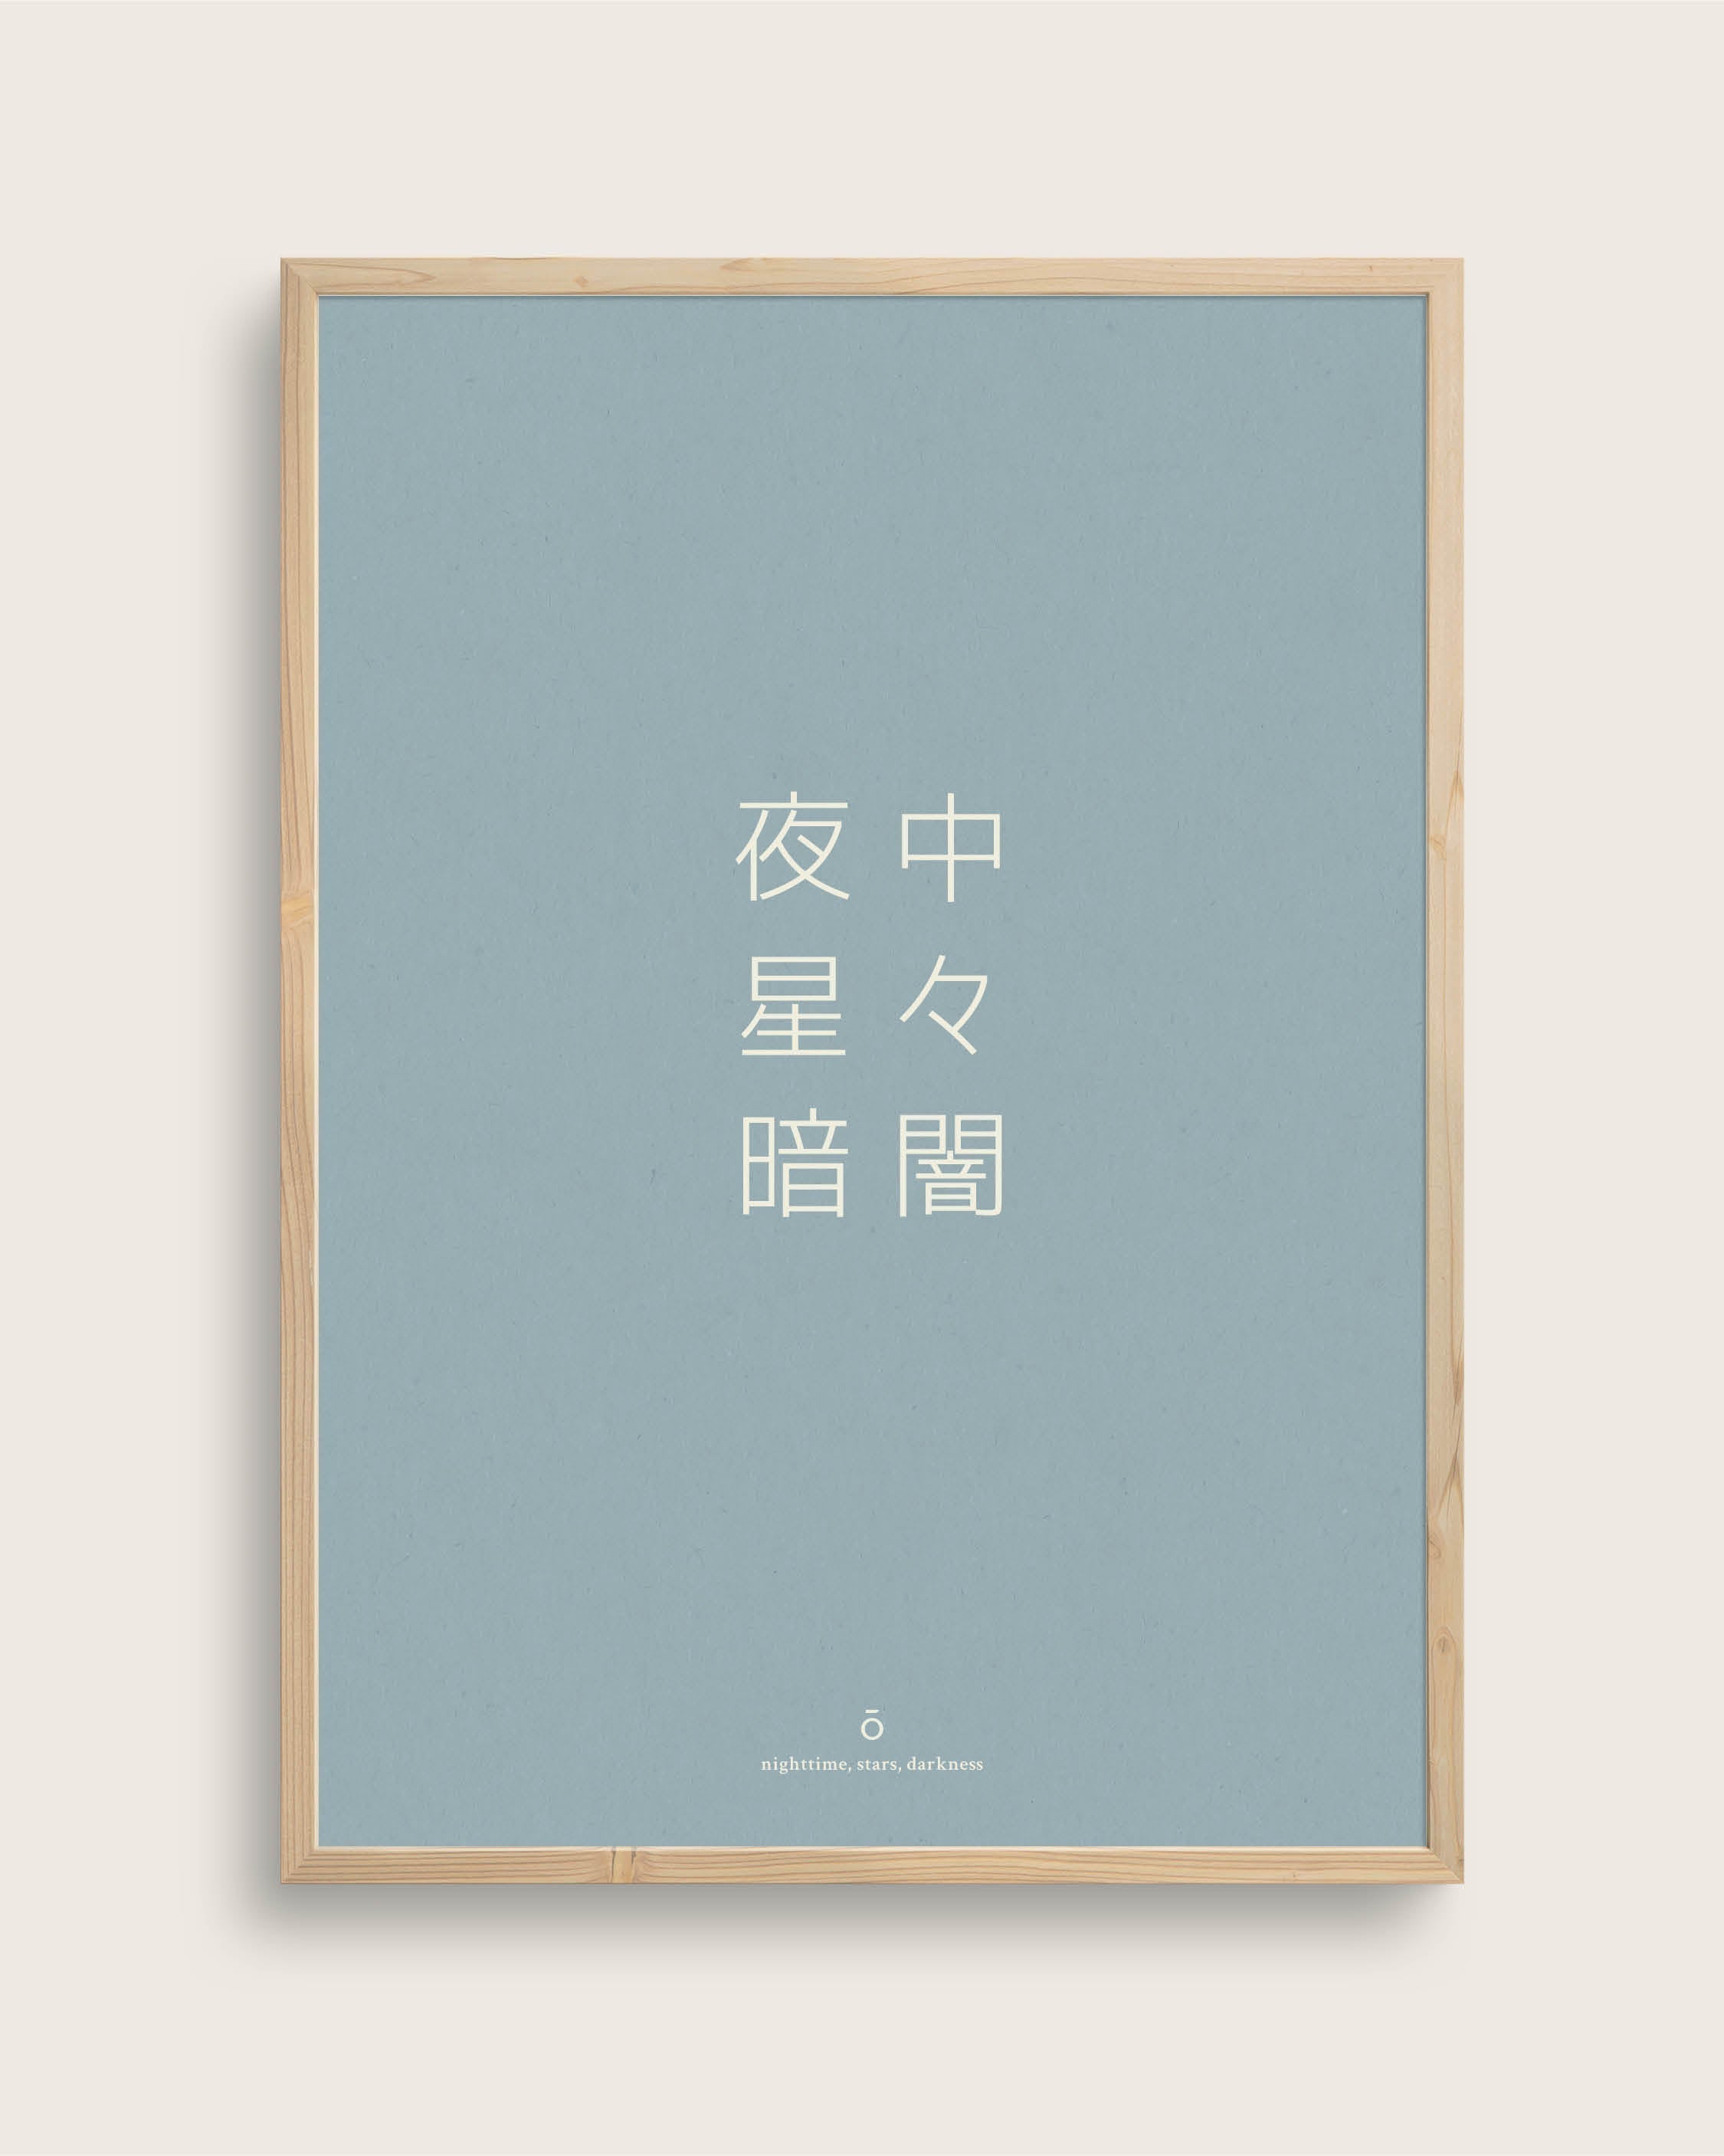 Se Kanji (nat) Størrelse 70x100 (akustikprint inkl. egetræsramme) | Seramikku hos Seramikku.dk